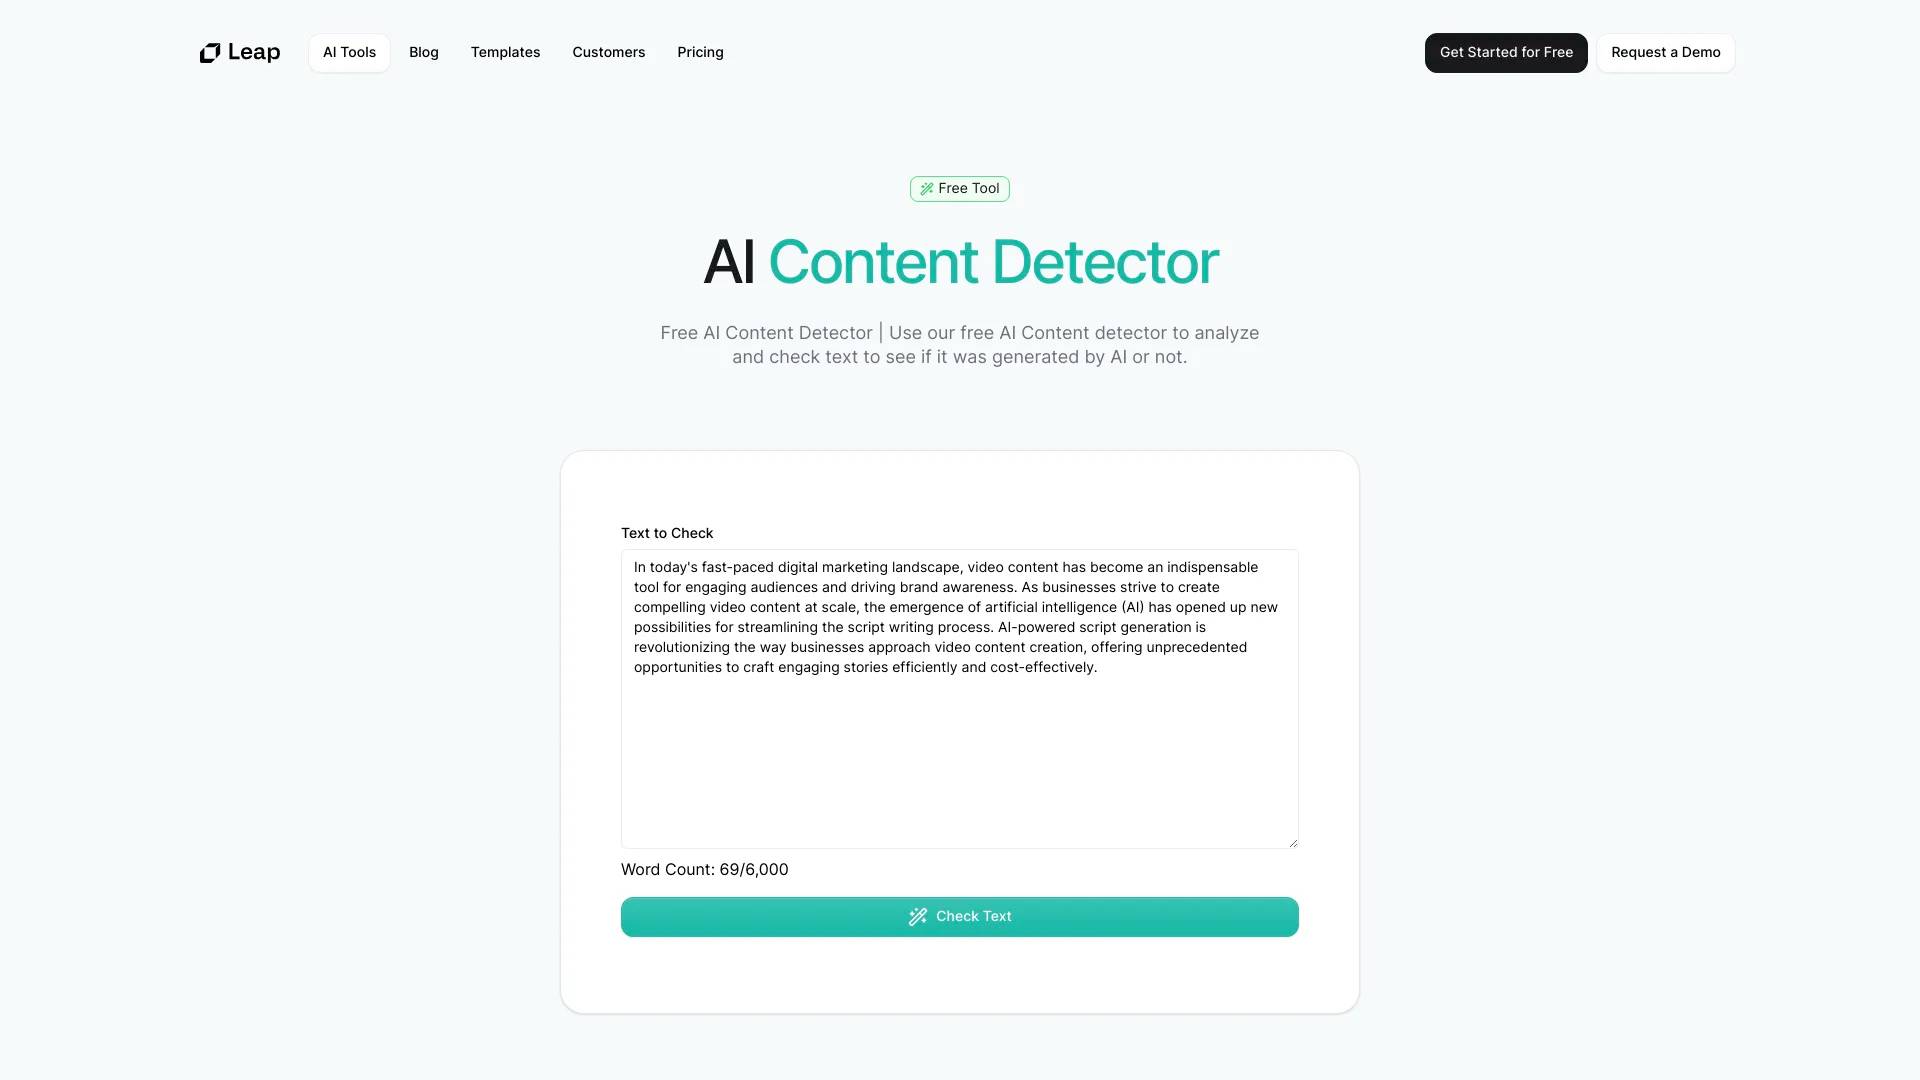 AI Content Detector by Leap AI screenshot